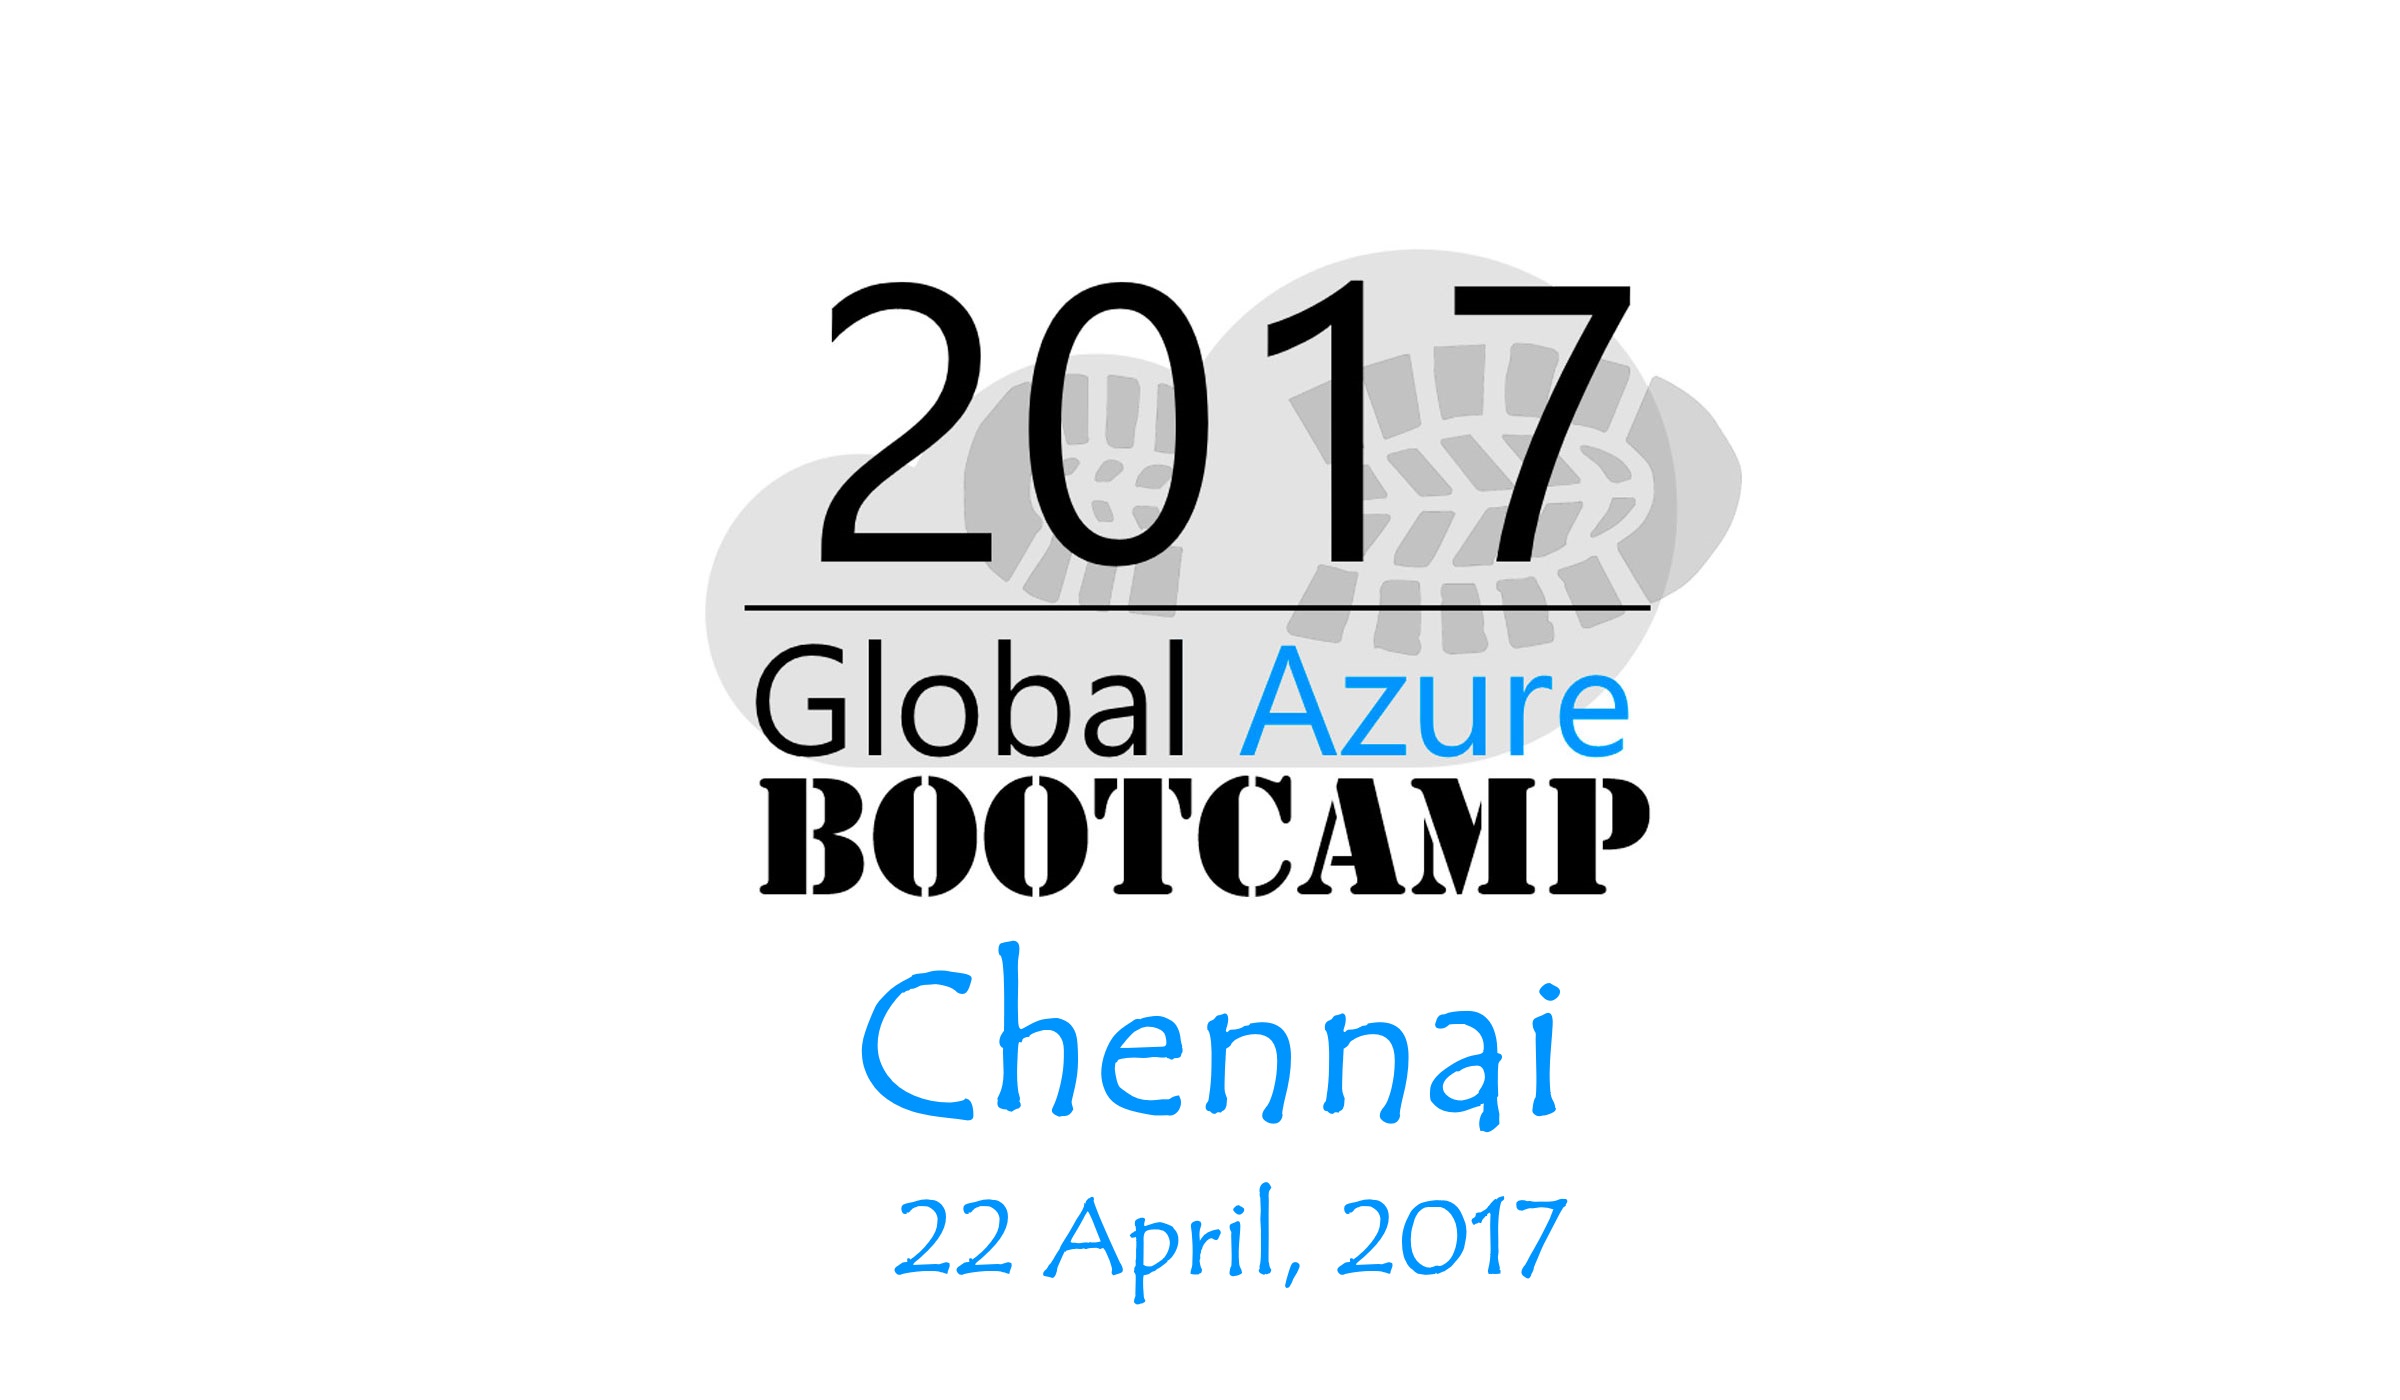 Global Azure Bootcamp Chennai 2017